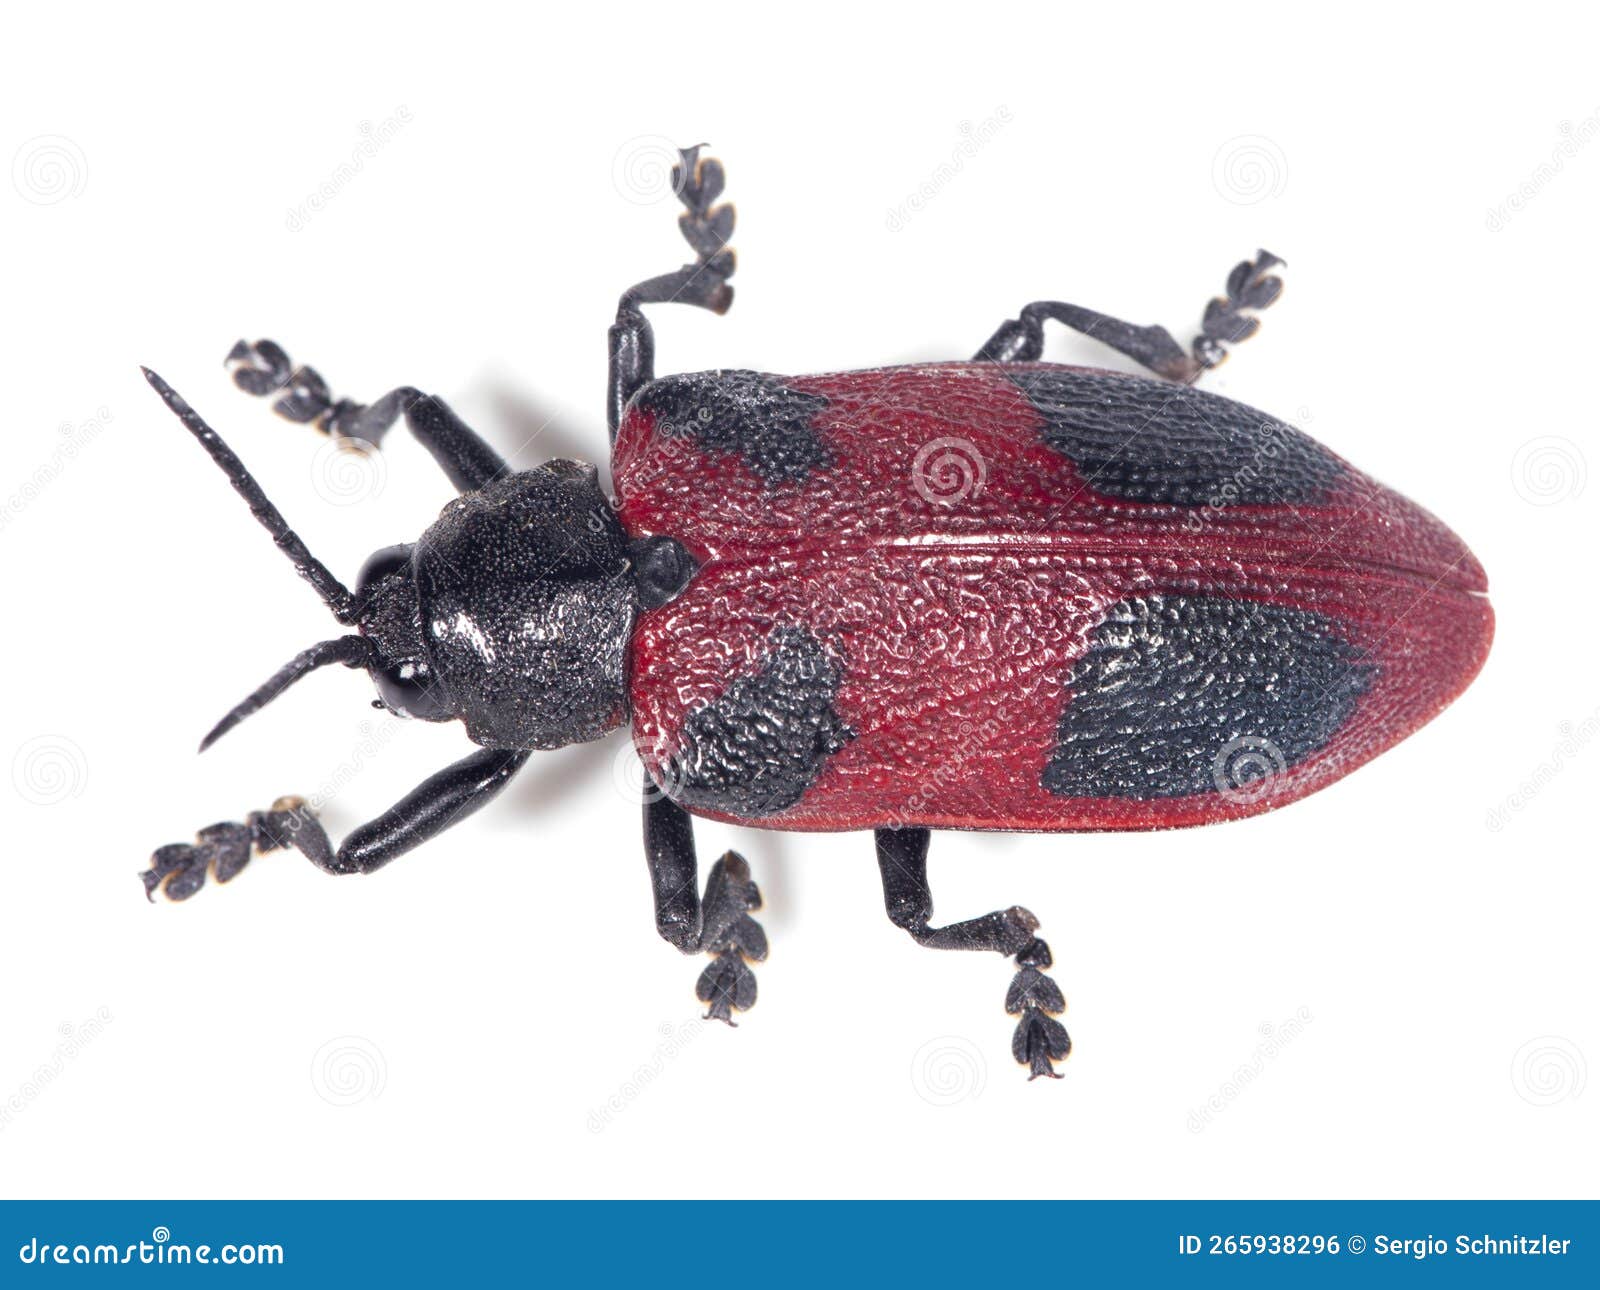 beetle coraliomela quadrimaculata